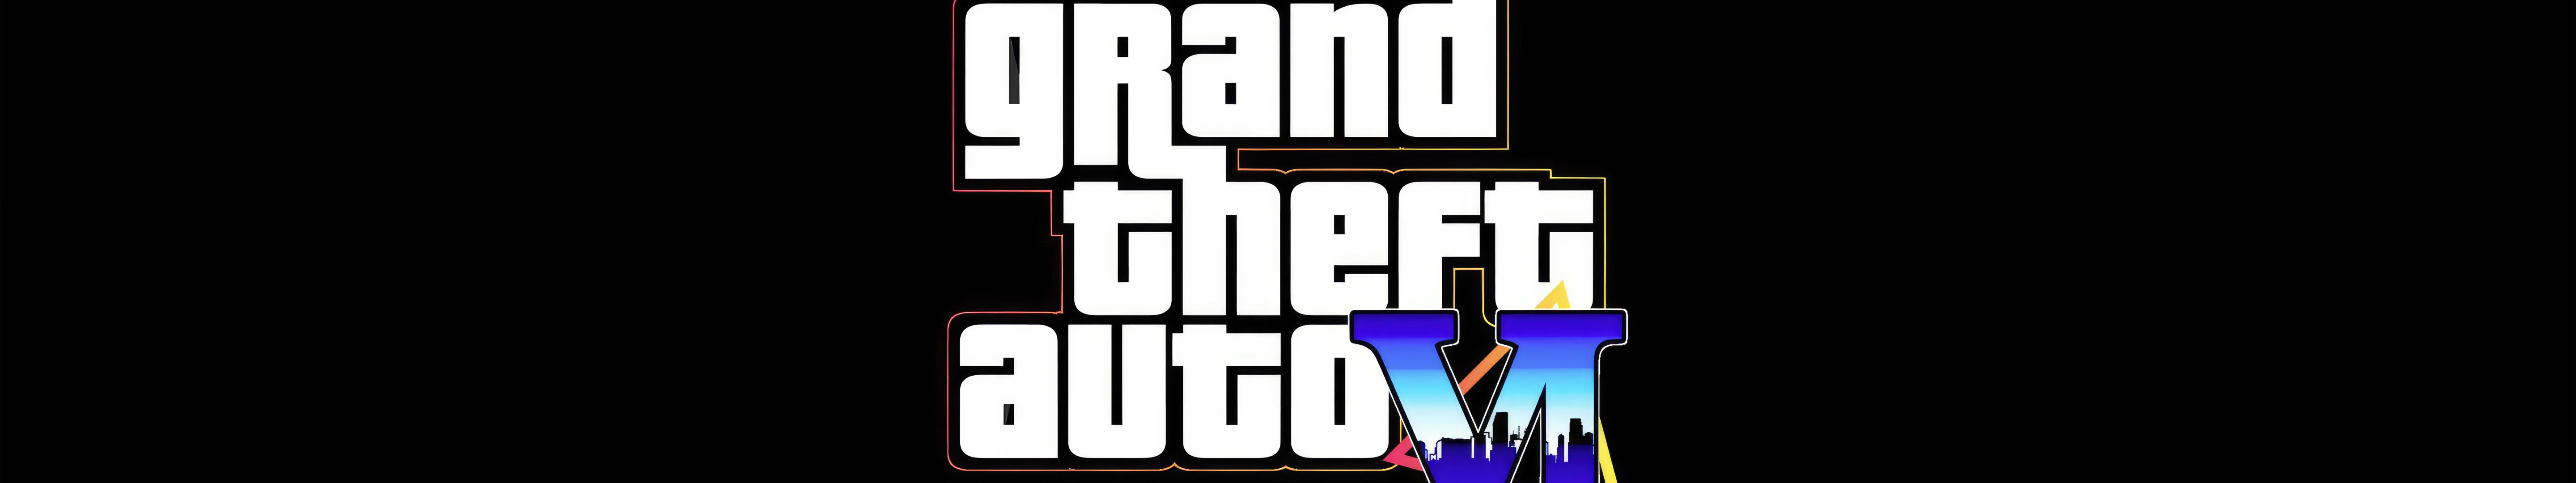 Download wallpaper logo, logo, GTA 6, GTA VI, Grand Theft Auto VI, GTA ...